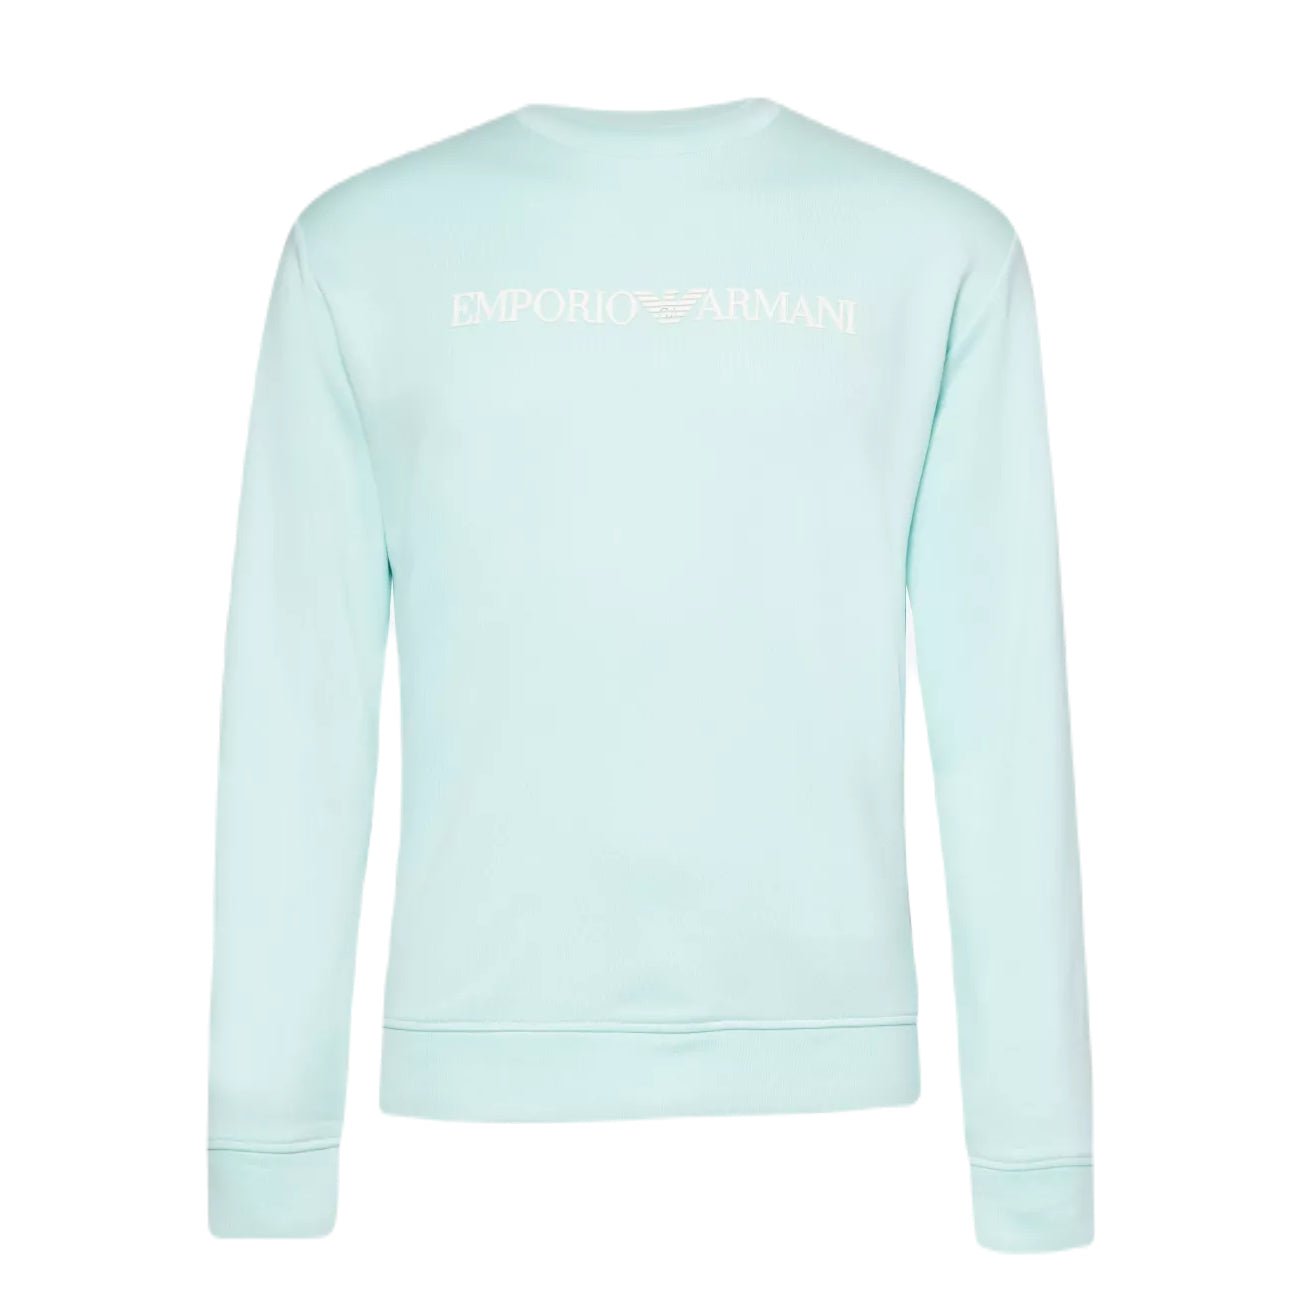 Emporio Armani 8N1MR6 Sweatshirt - 767 Aqua - Escape Menswear